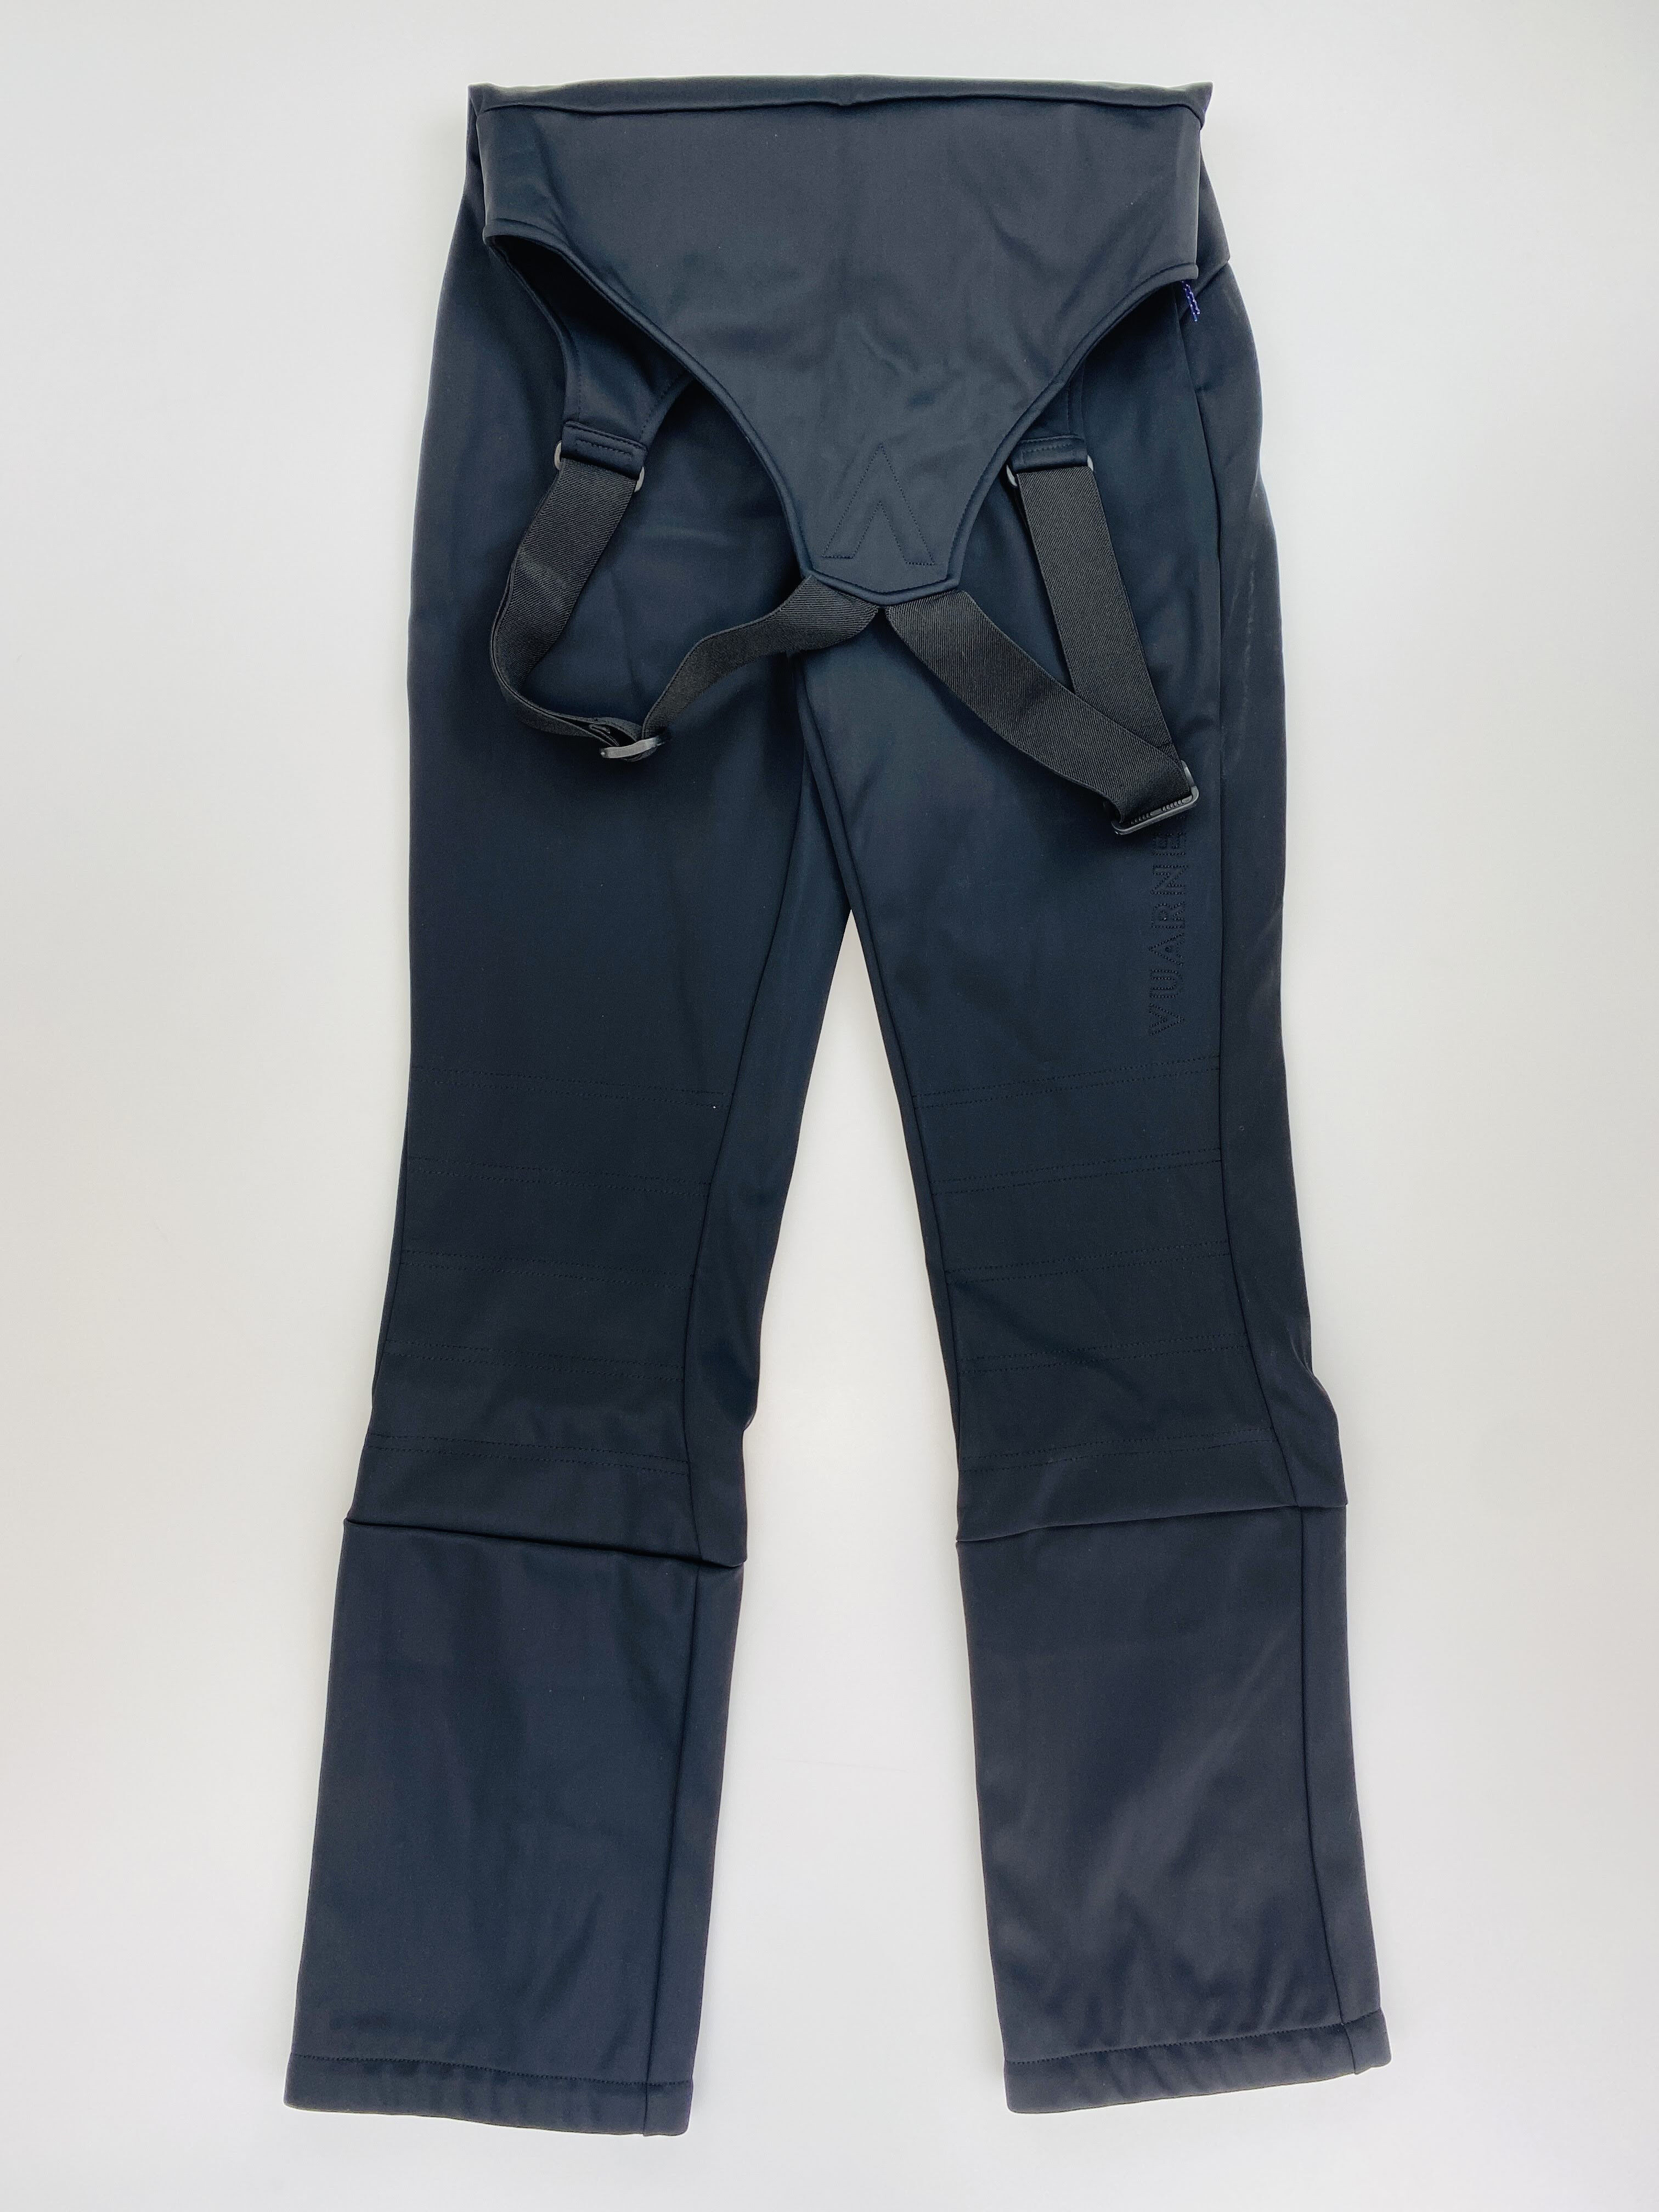 Vuarnet W'S Tosa Pant Saloppette - Second Hand Ski trousers - Women's - Black - S | Hardloop